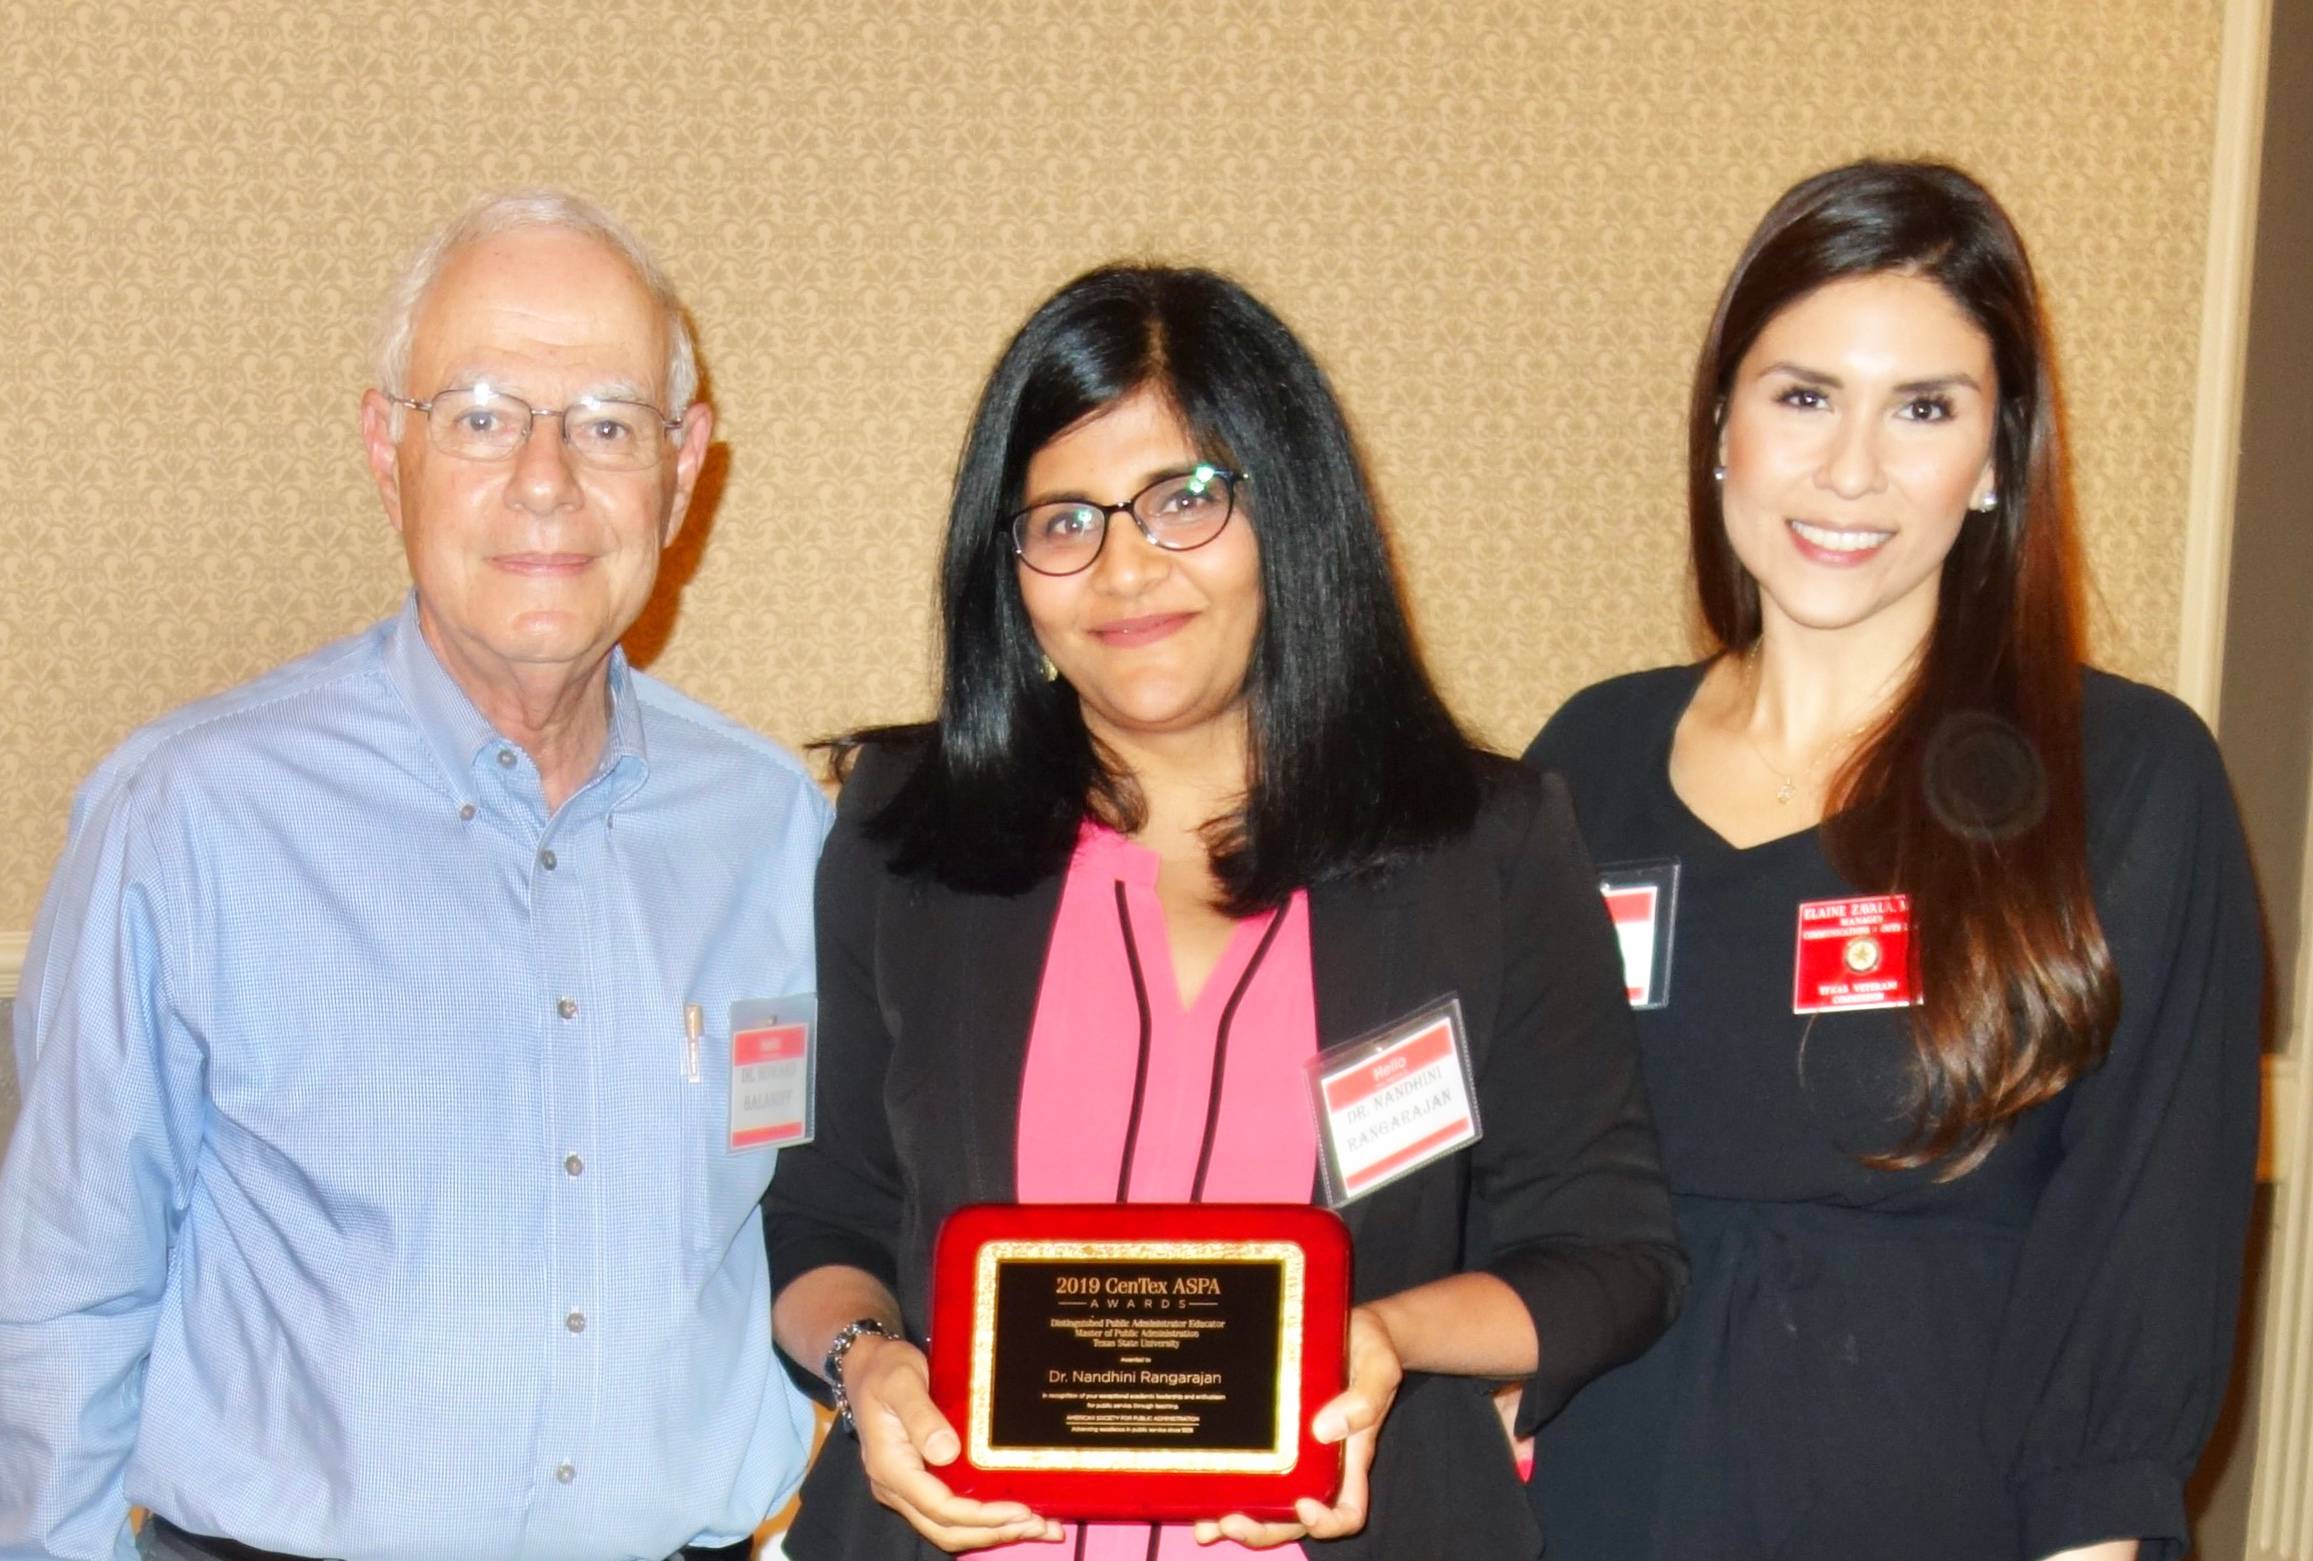 Dr. Nandhini Rangarajan holding her award